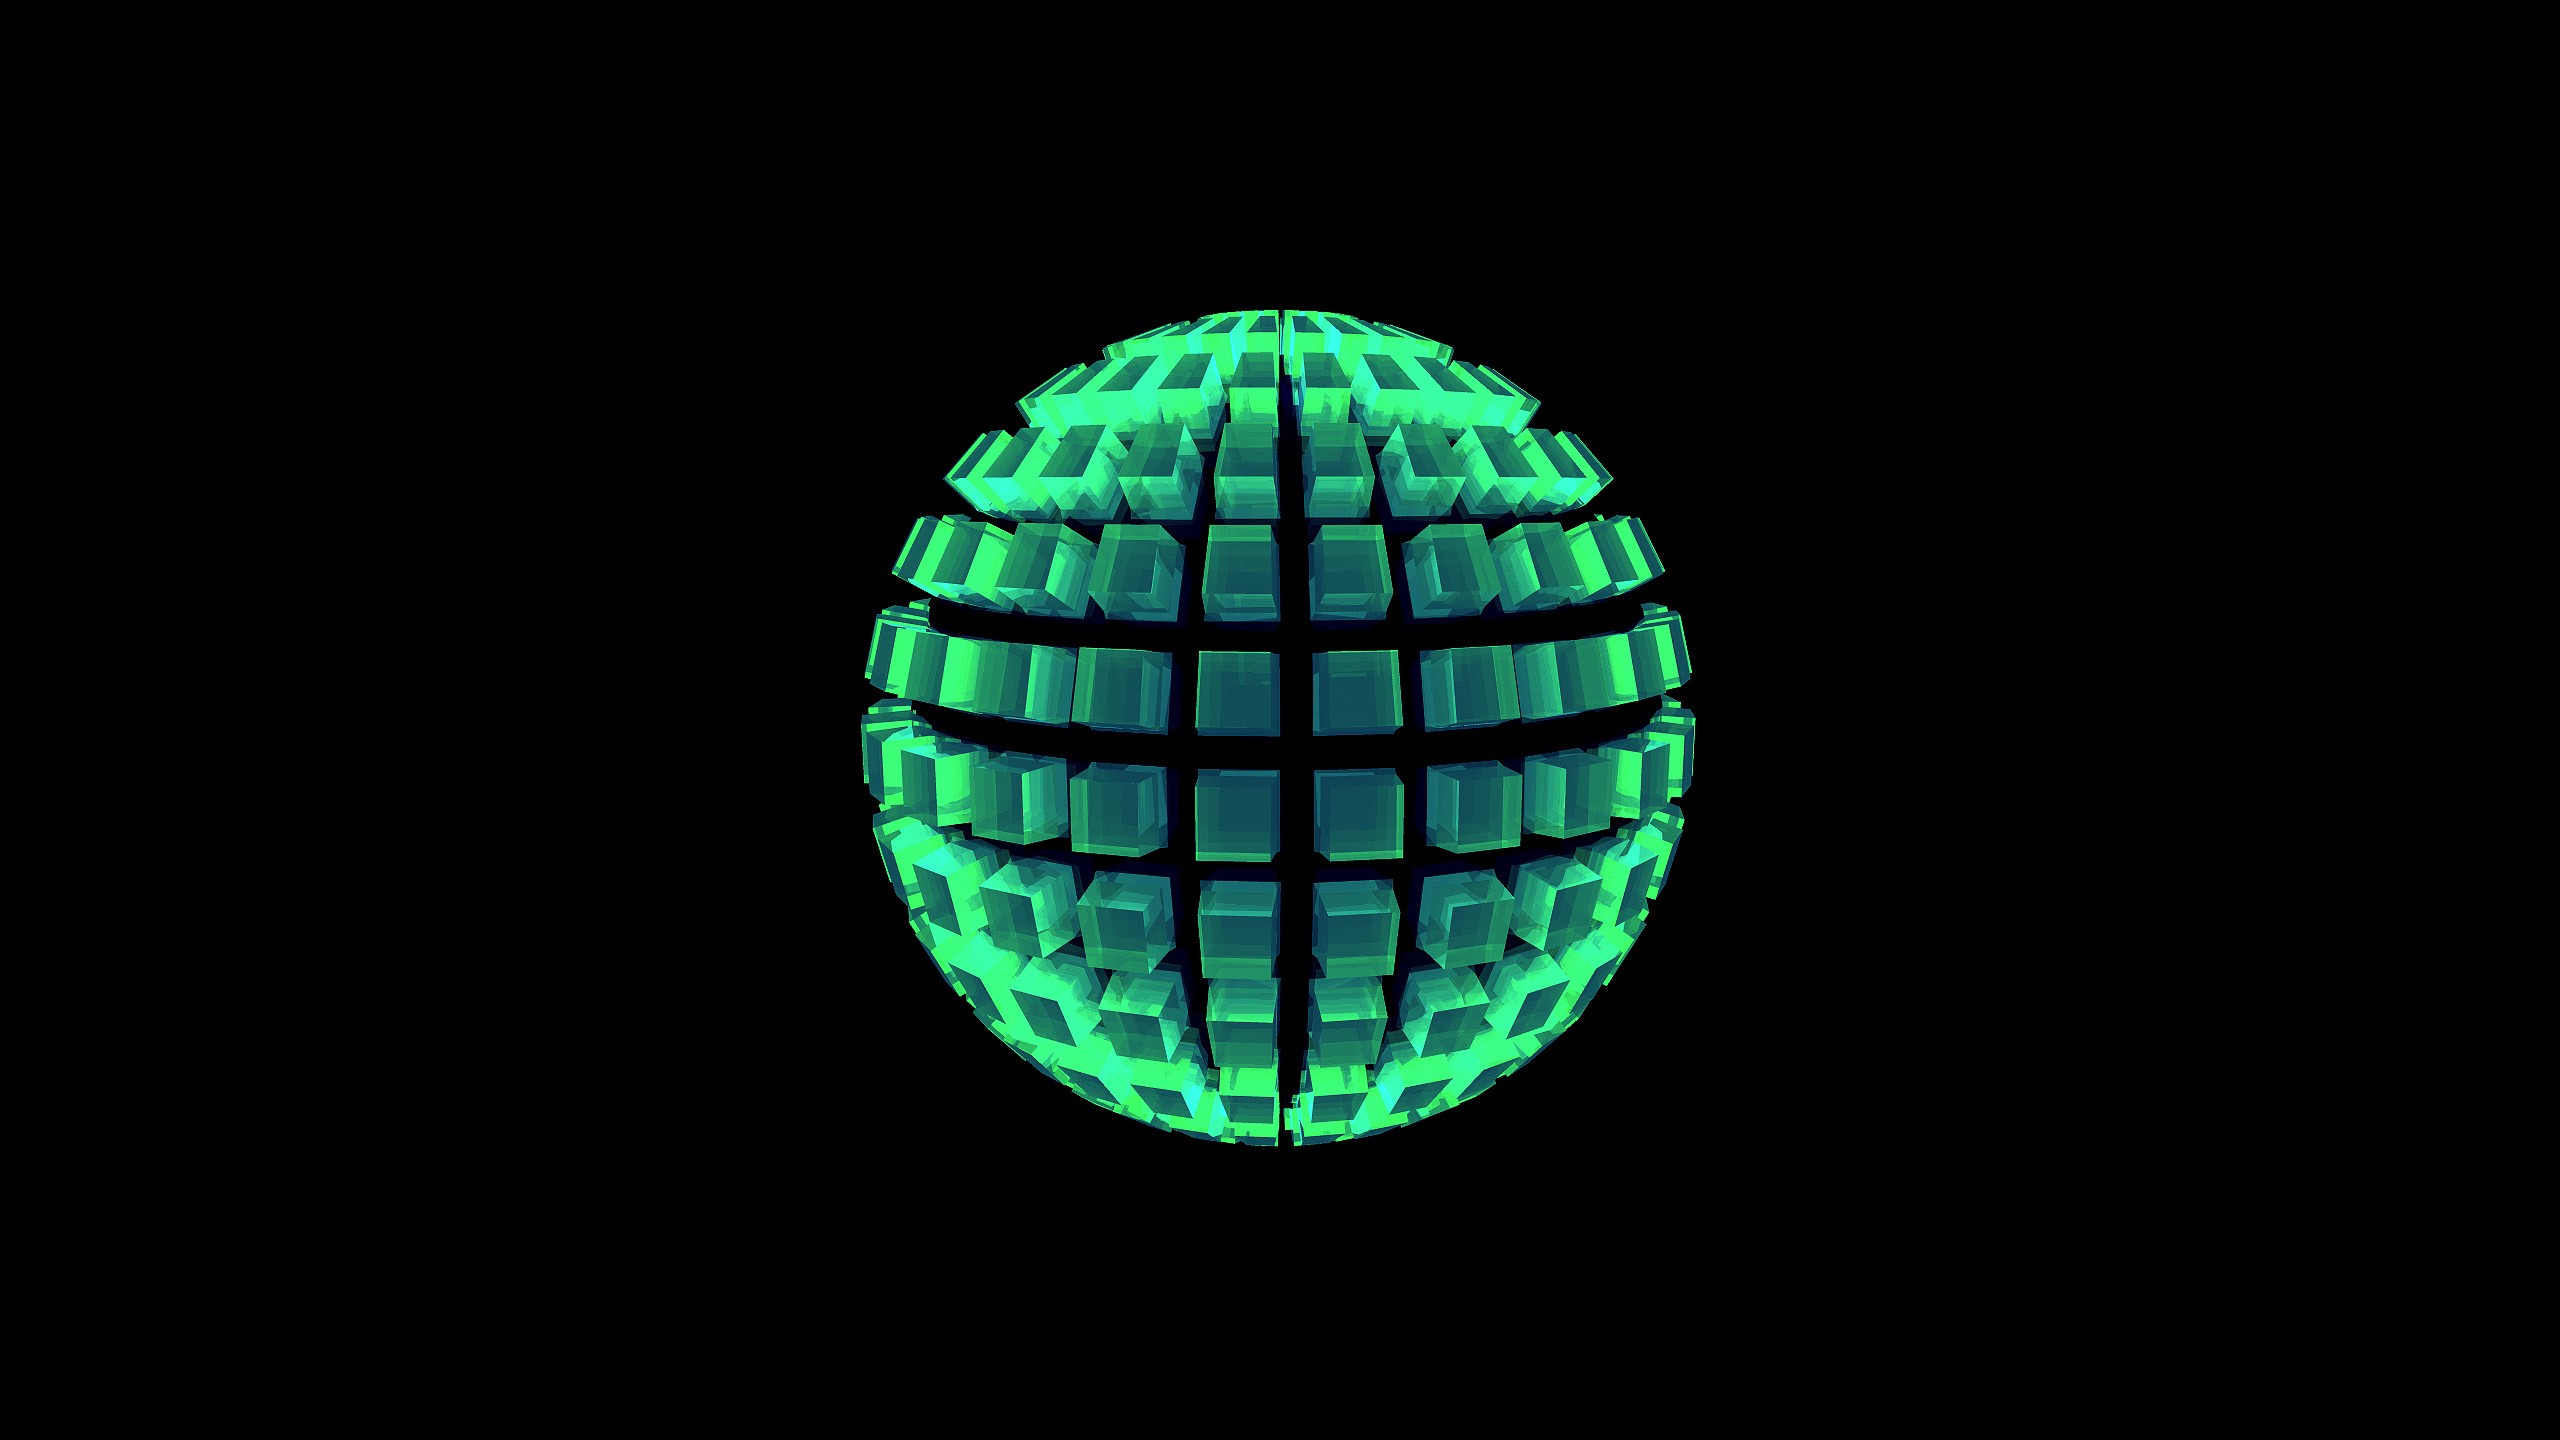 General 2560x1440 digital art sphere minimalism green black background simple background 3D Blocks 3D Abstract